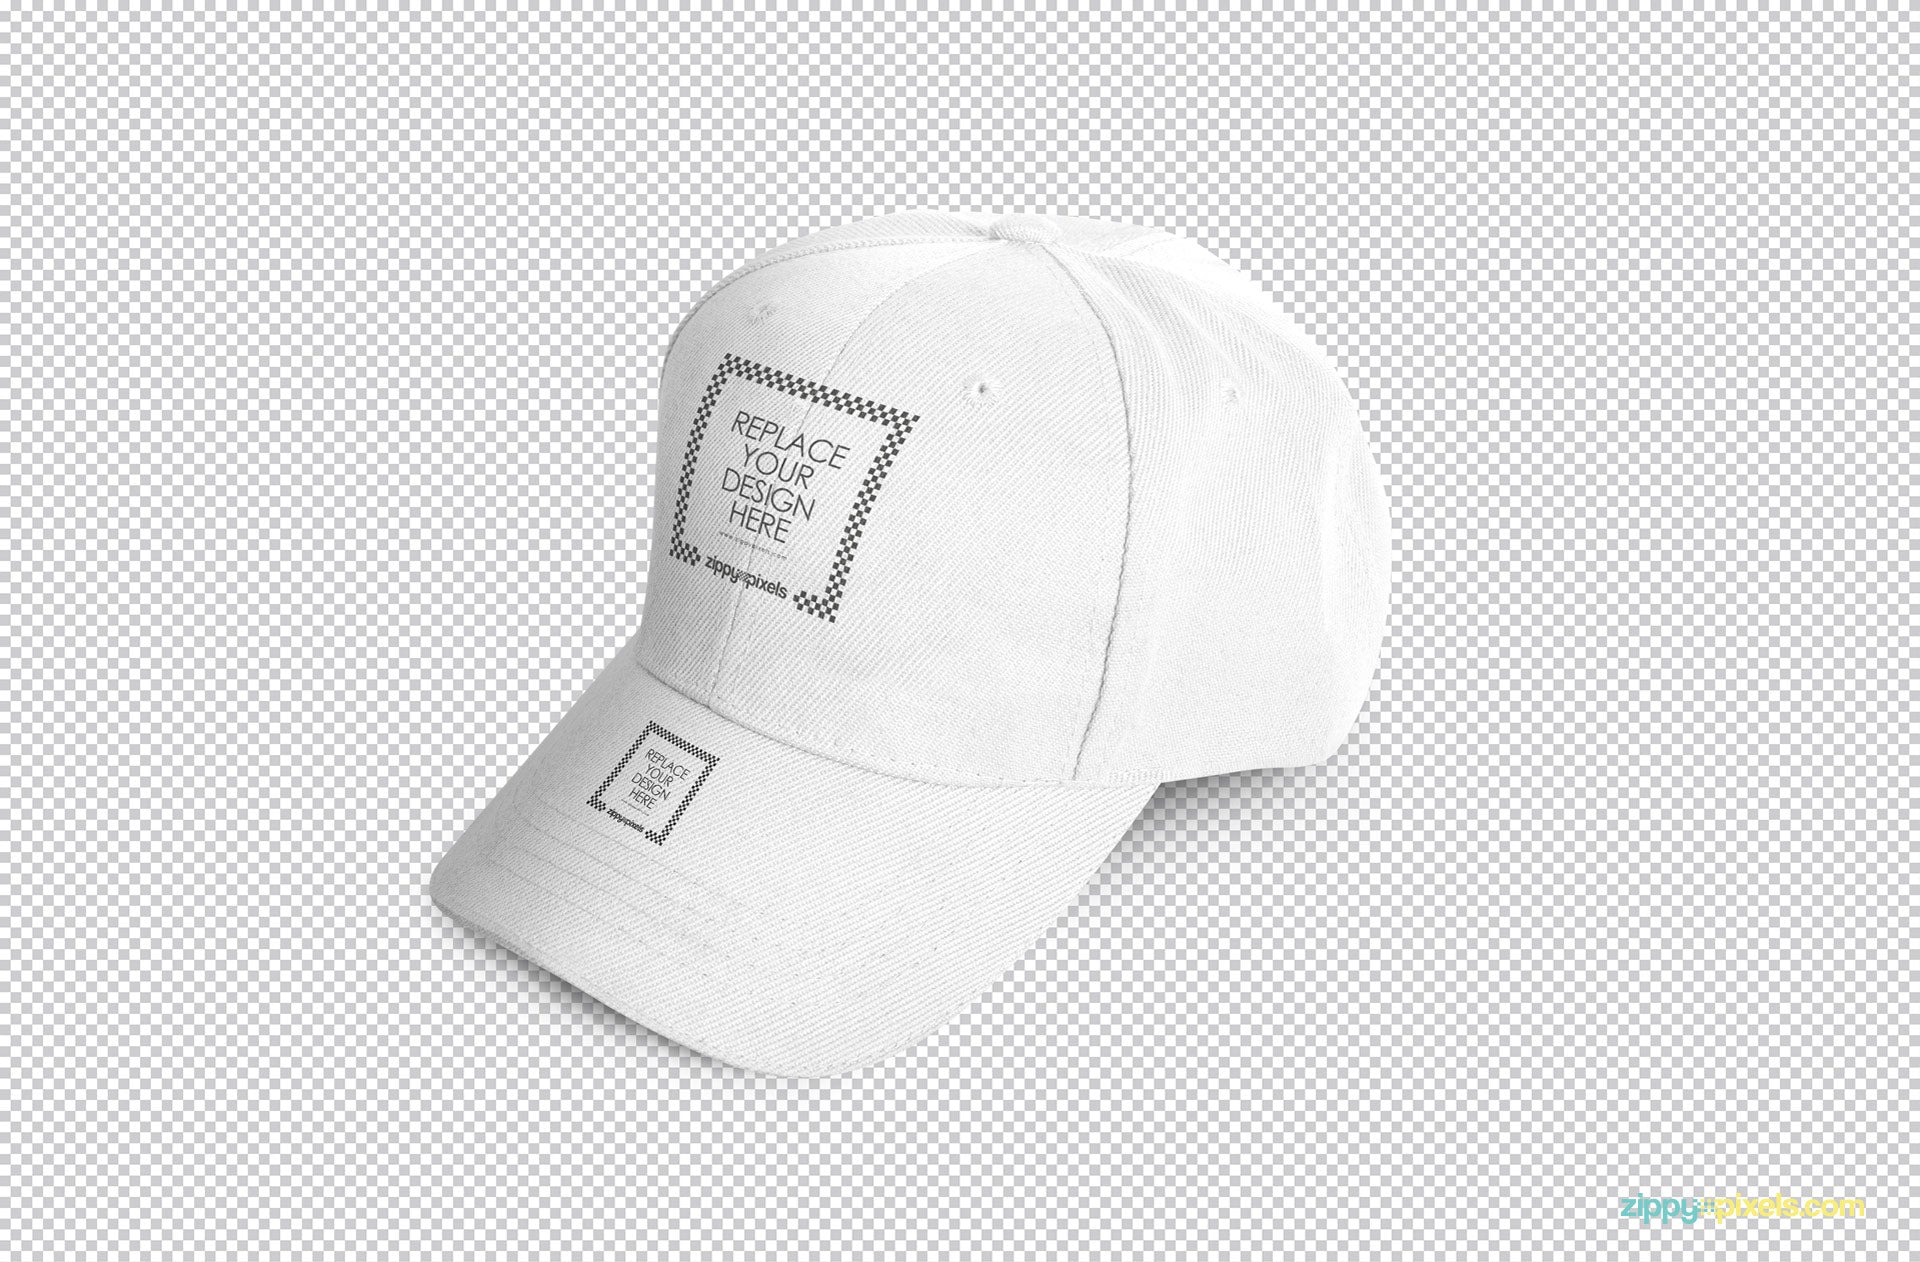 Download Customizable Dad Hat and Cap Mockup PSD - Mockup Hunt